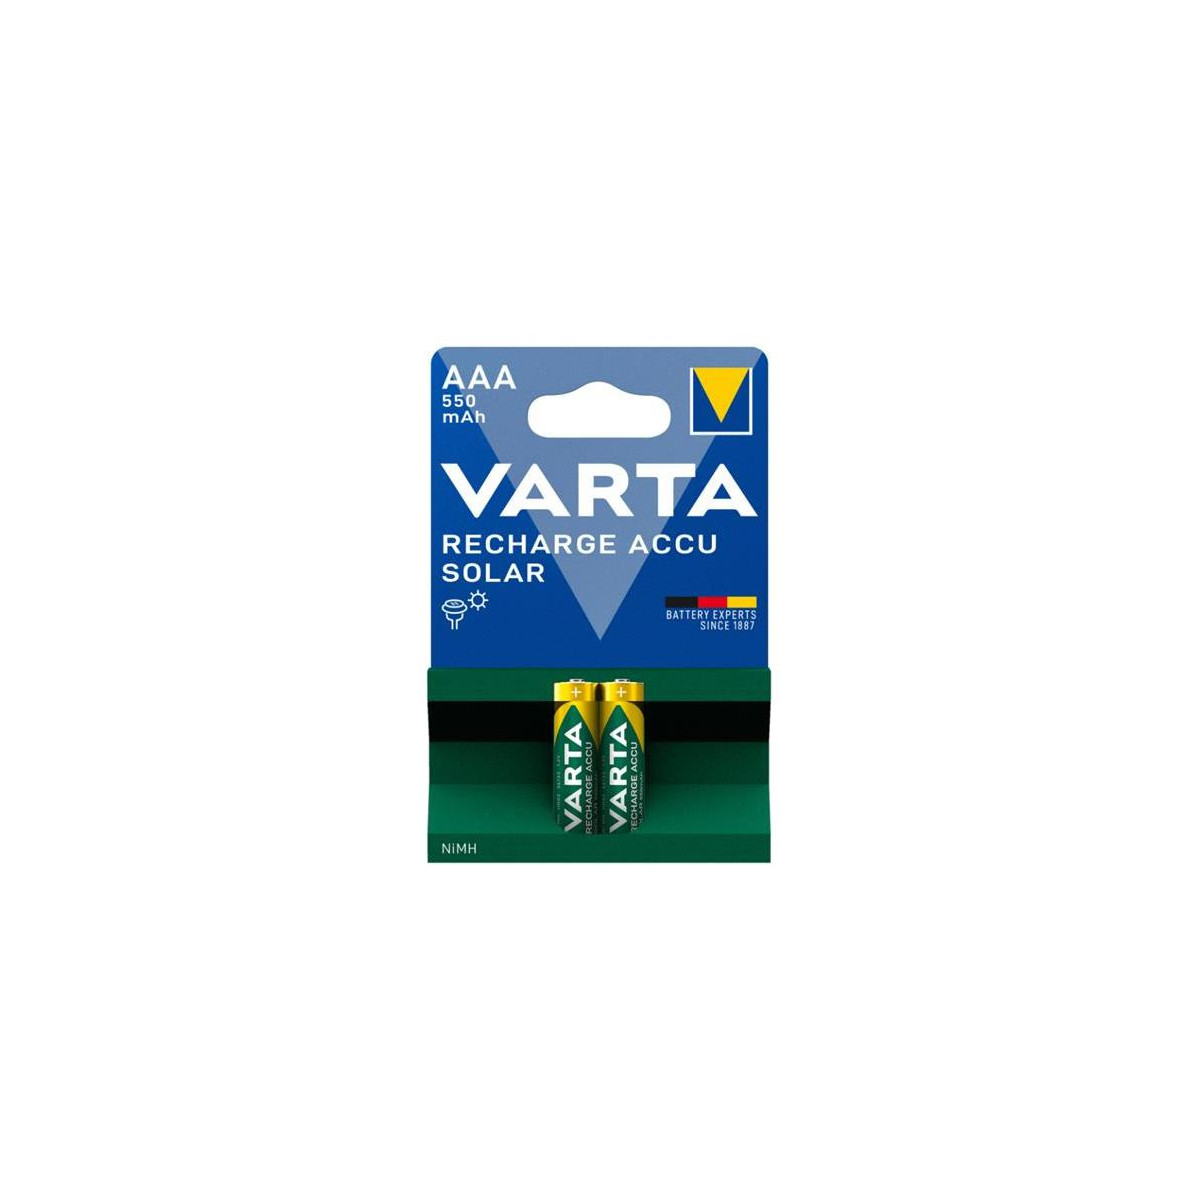 More about Baterie AAA nabíjecí VARTA BAT0342 Solar 2ks / blistr